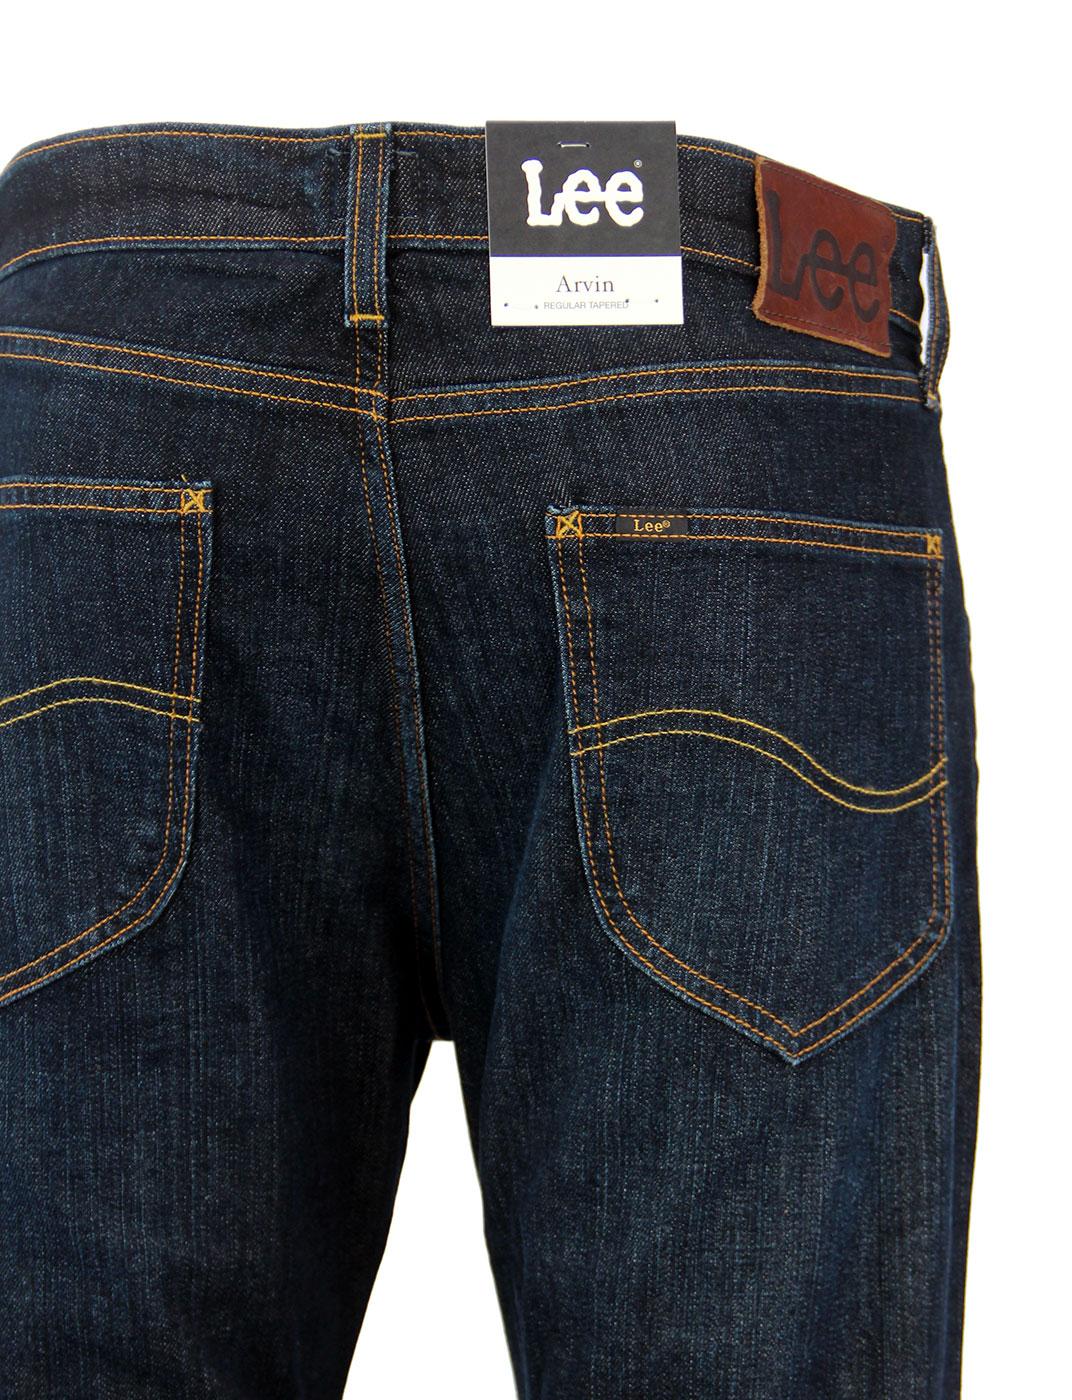 Arvin LEE Retro Mod Regular Tapered Denim Jeans in Deep Sea